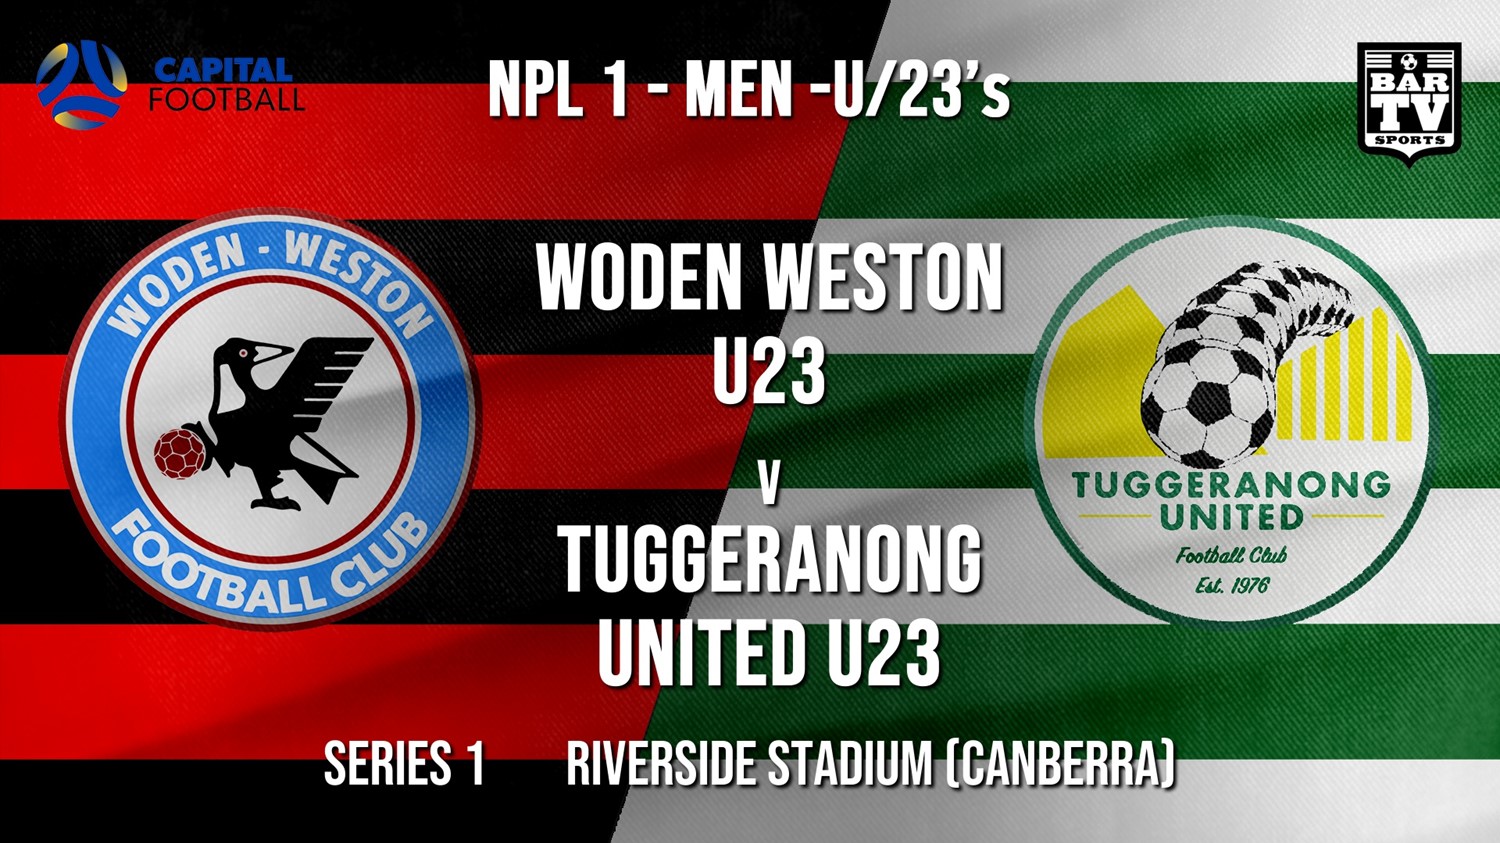 NPL1 Men - U23 - Capital Football  Series 1 - Woden Weston U23 v Tuggeranong United U23 Minigame Slate Image